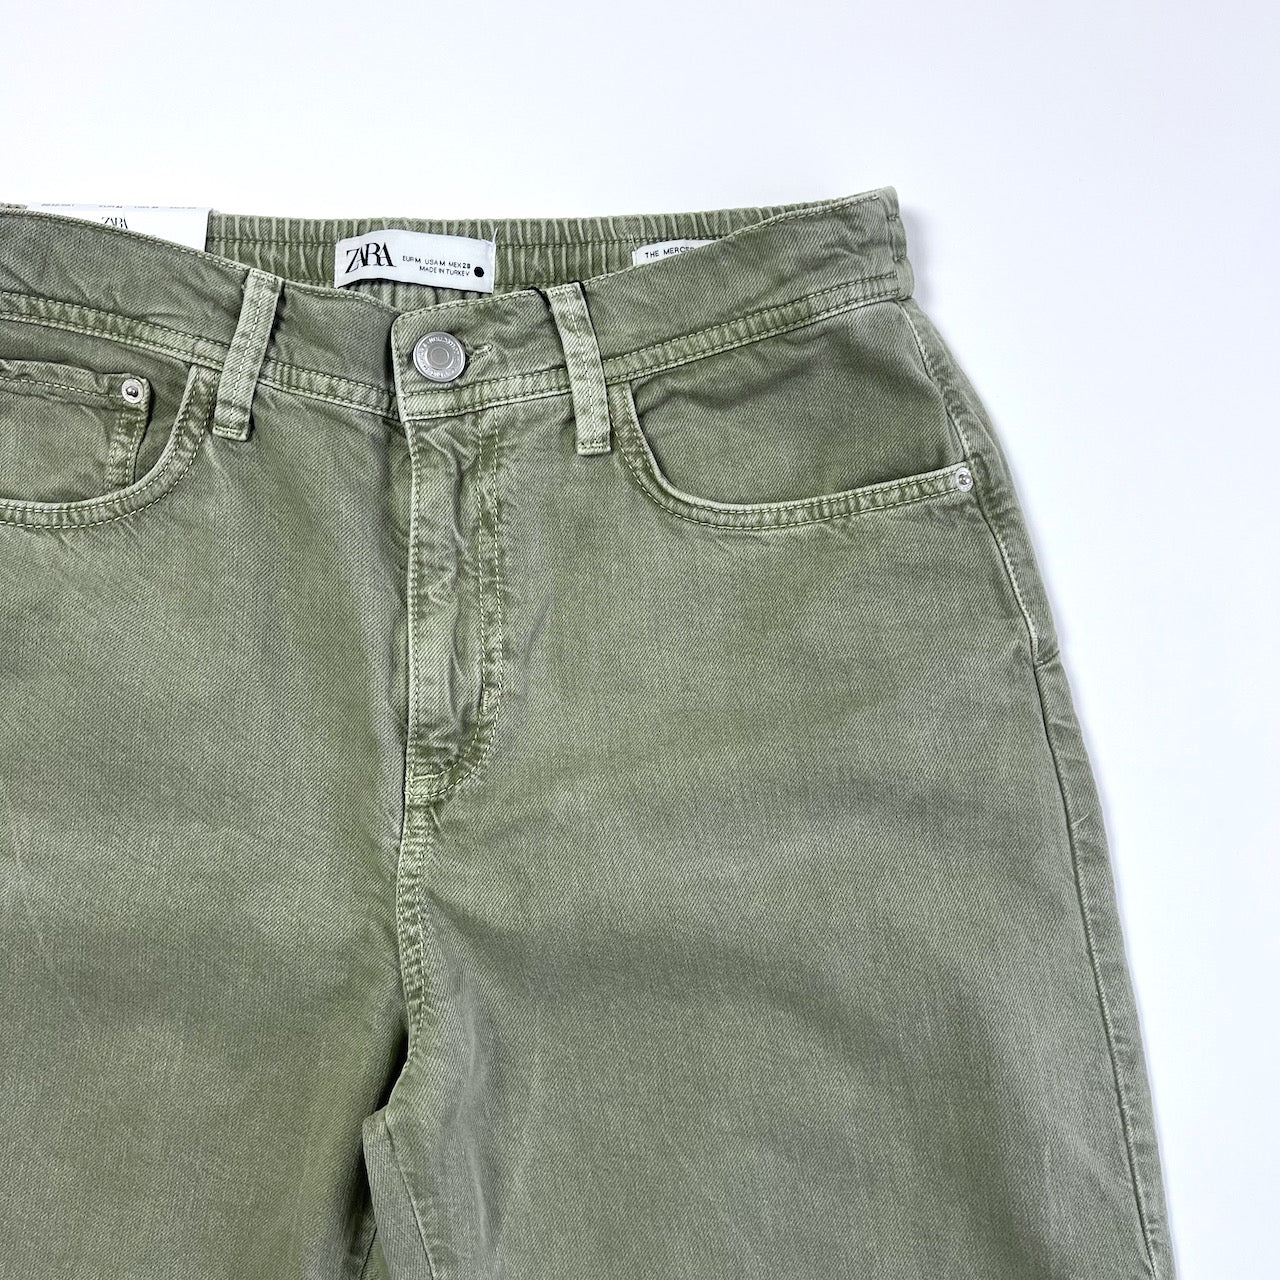 Zara Women’s Mercer Jogger Pants Trousers Elastic Waist Olive Green Size  Small